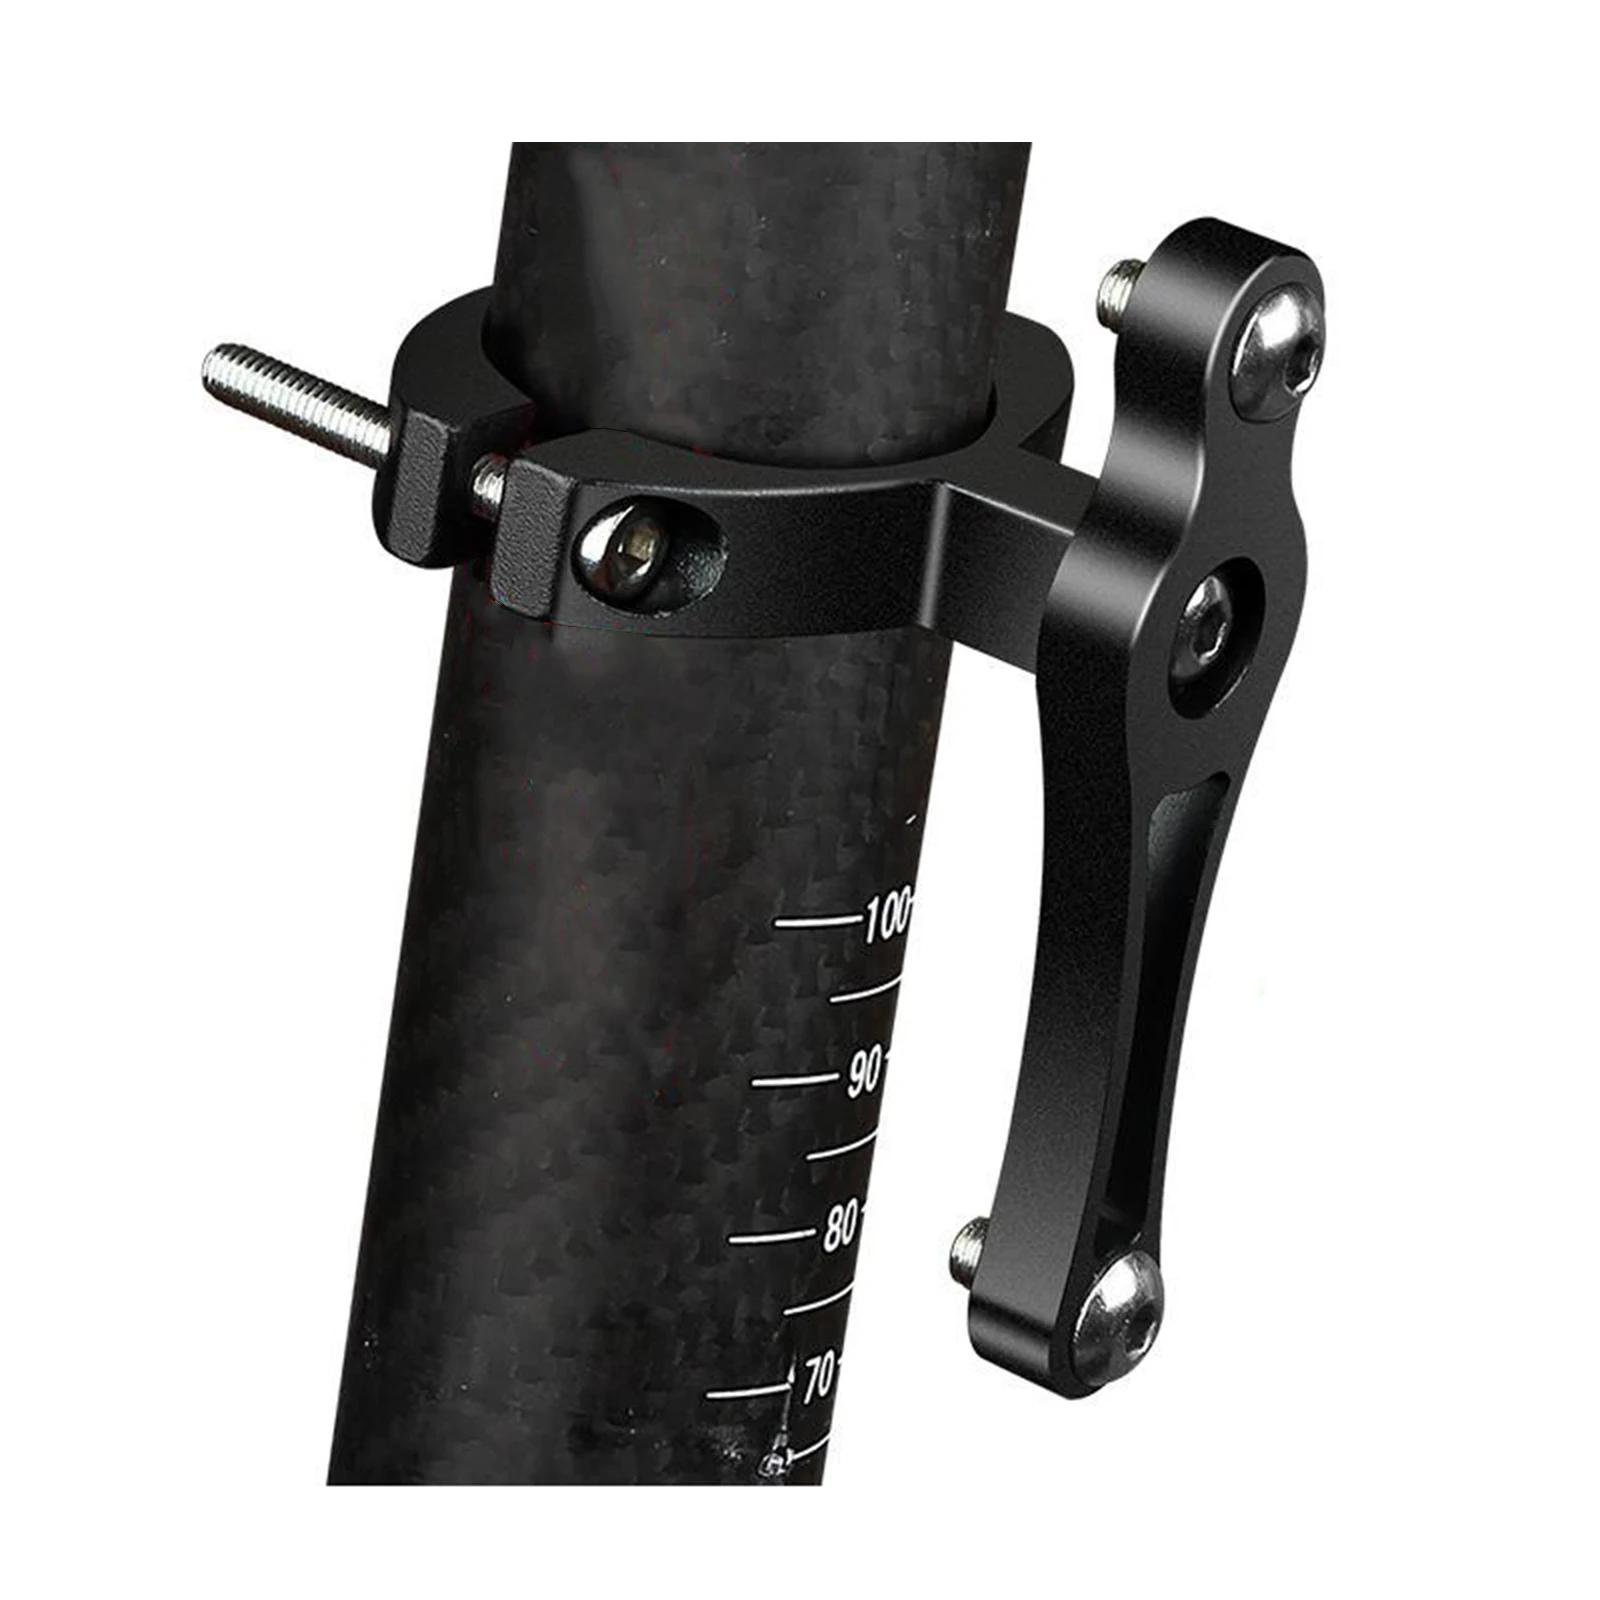 Adjustable Bicycle Bottle Holder Adapter Multifunctional Bike Handlebar Seat Water Cup Kettle Rack Clips Bracket Rack